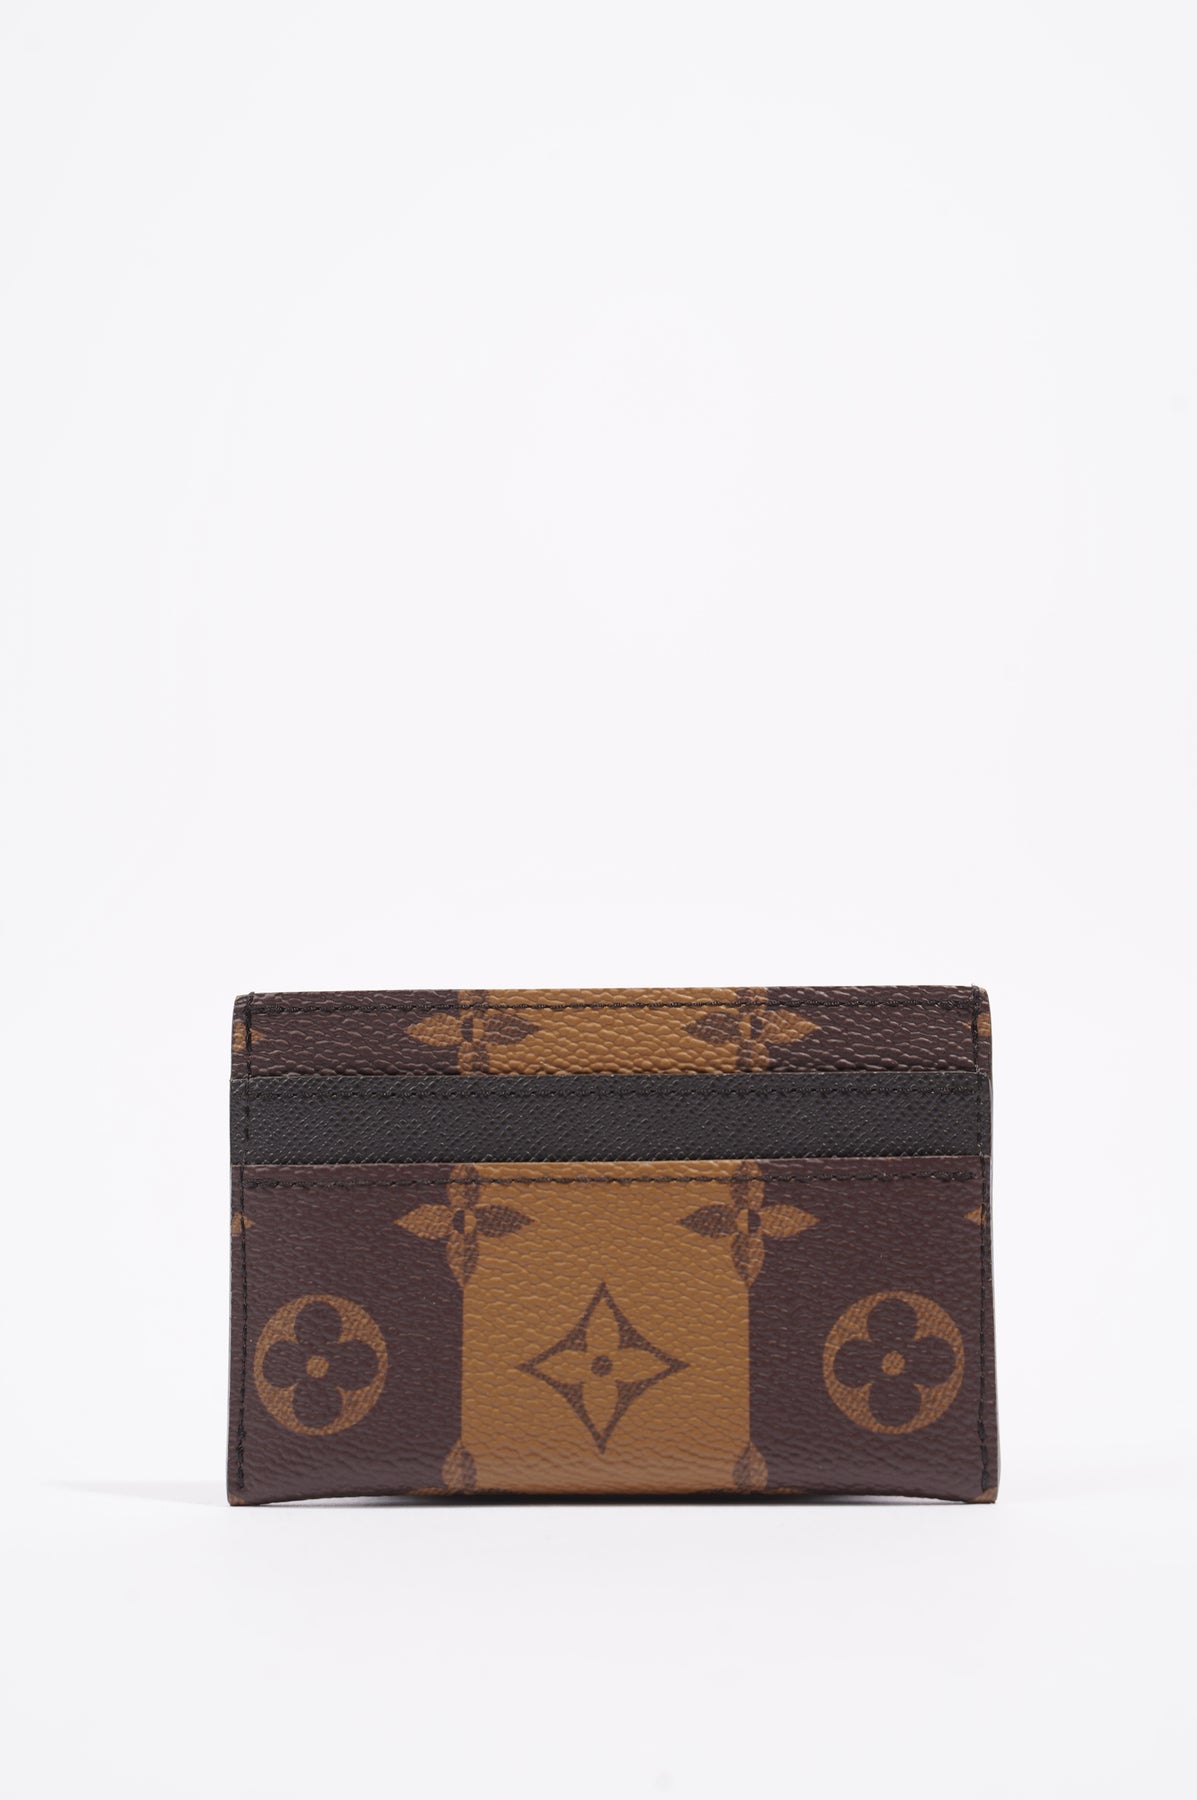 LOUIS VUITTON X NIGO Monogram Box 1192591